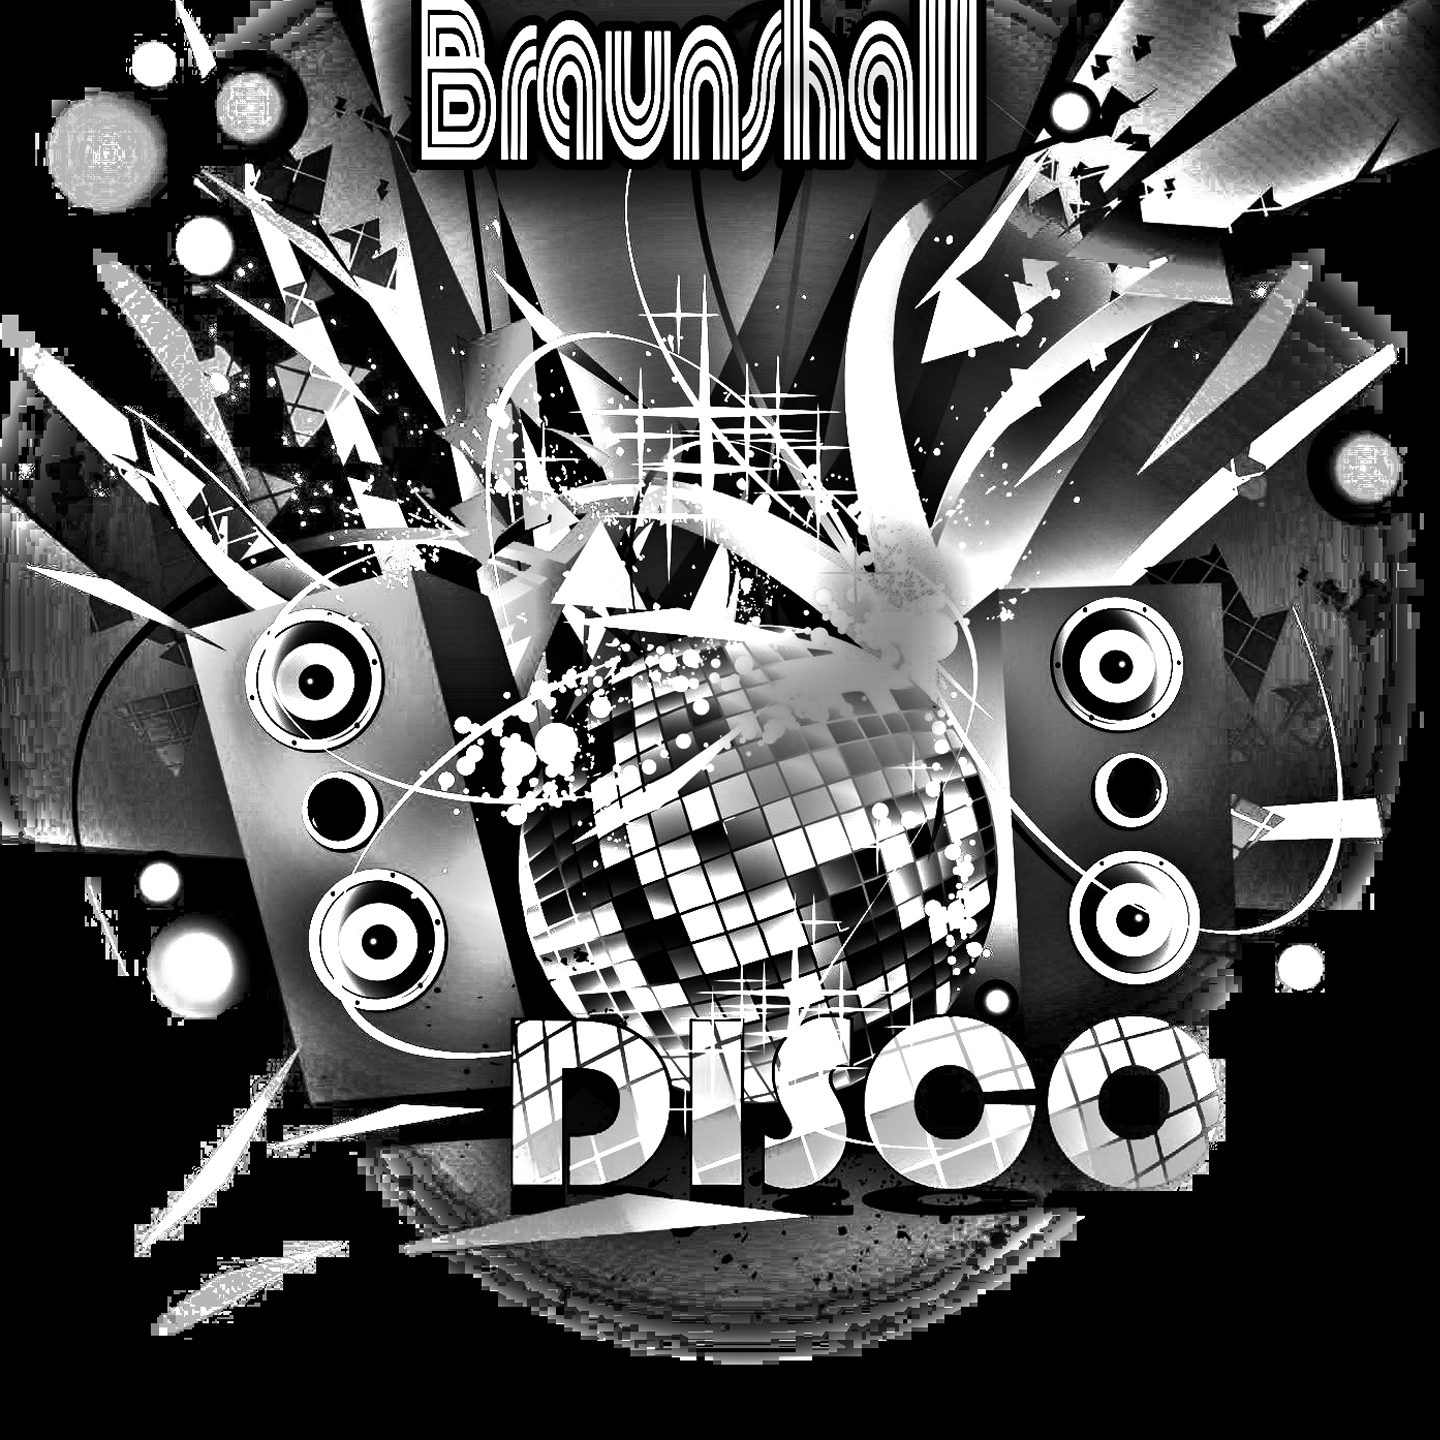 Disco Braunshall